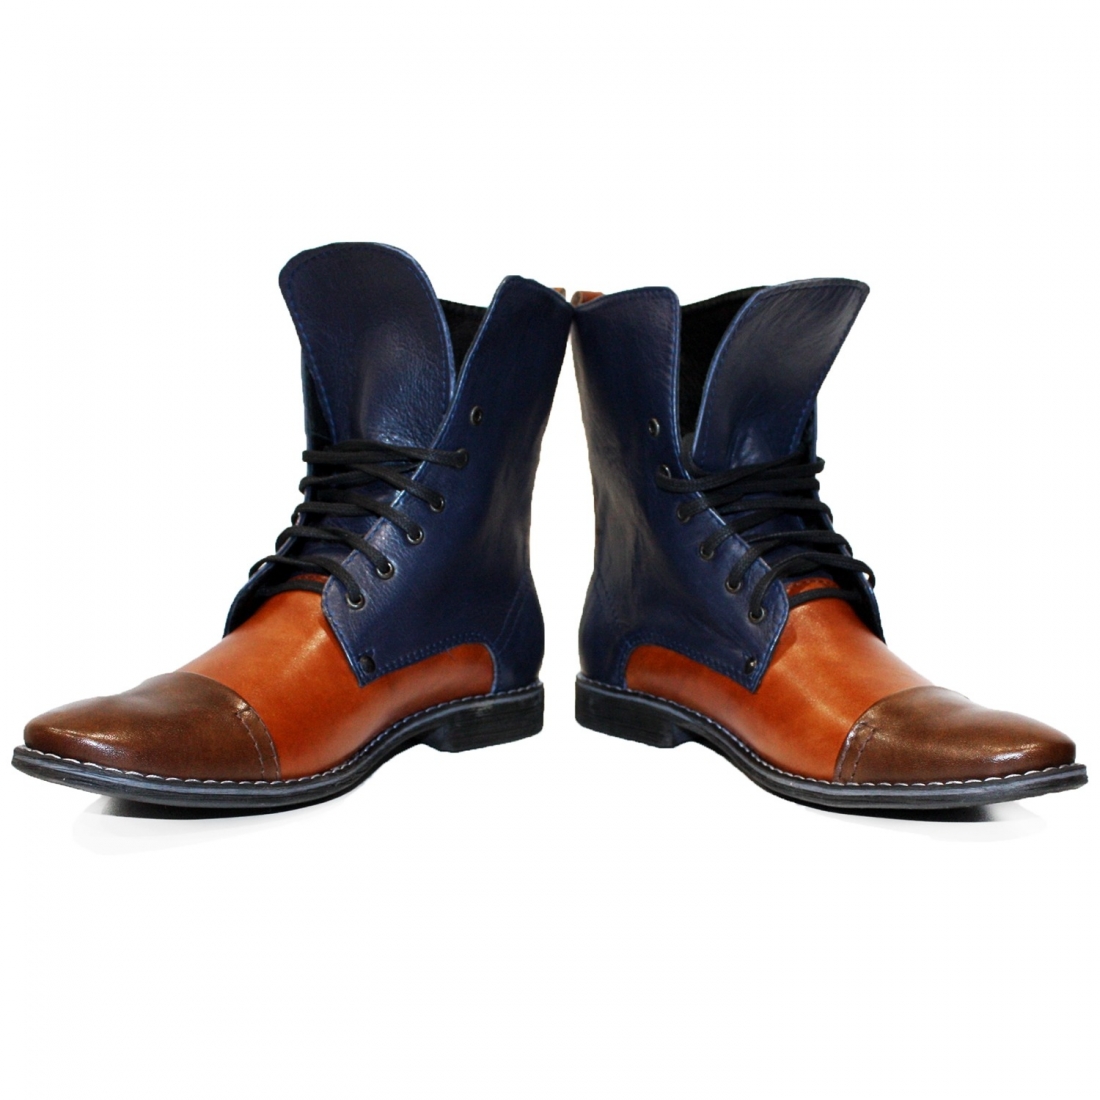 Modello Pakidollo - Bottes Hautes - Handmade Colorful Italian Leather Shoes